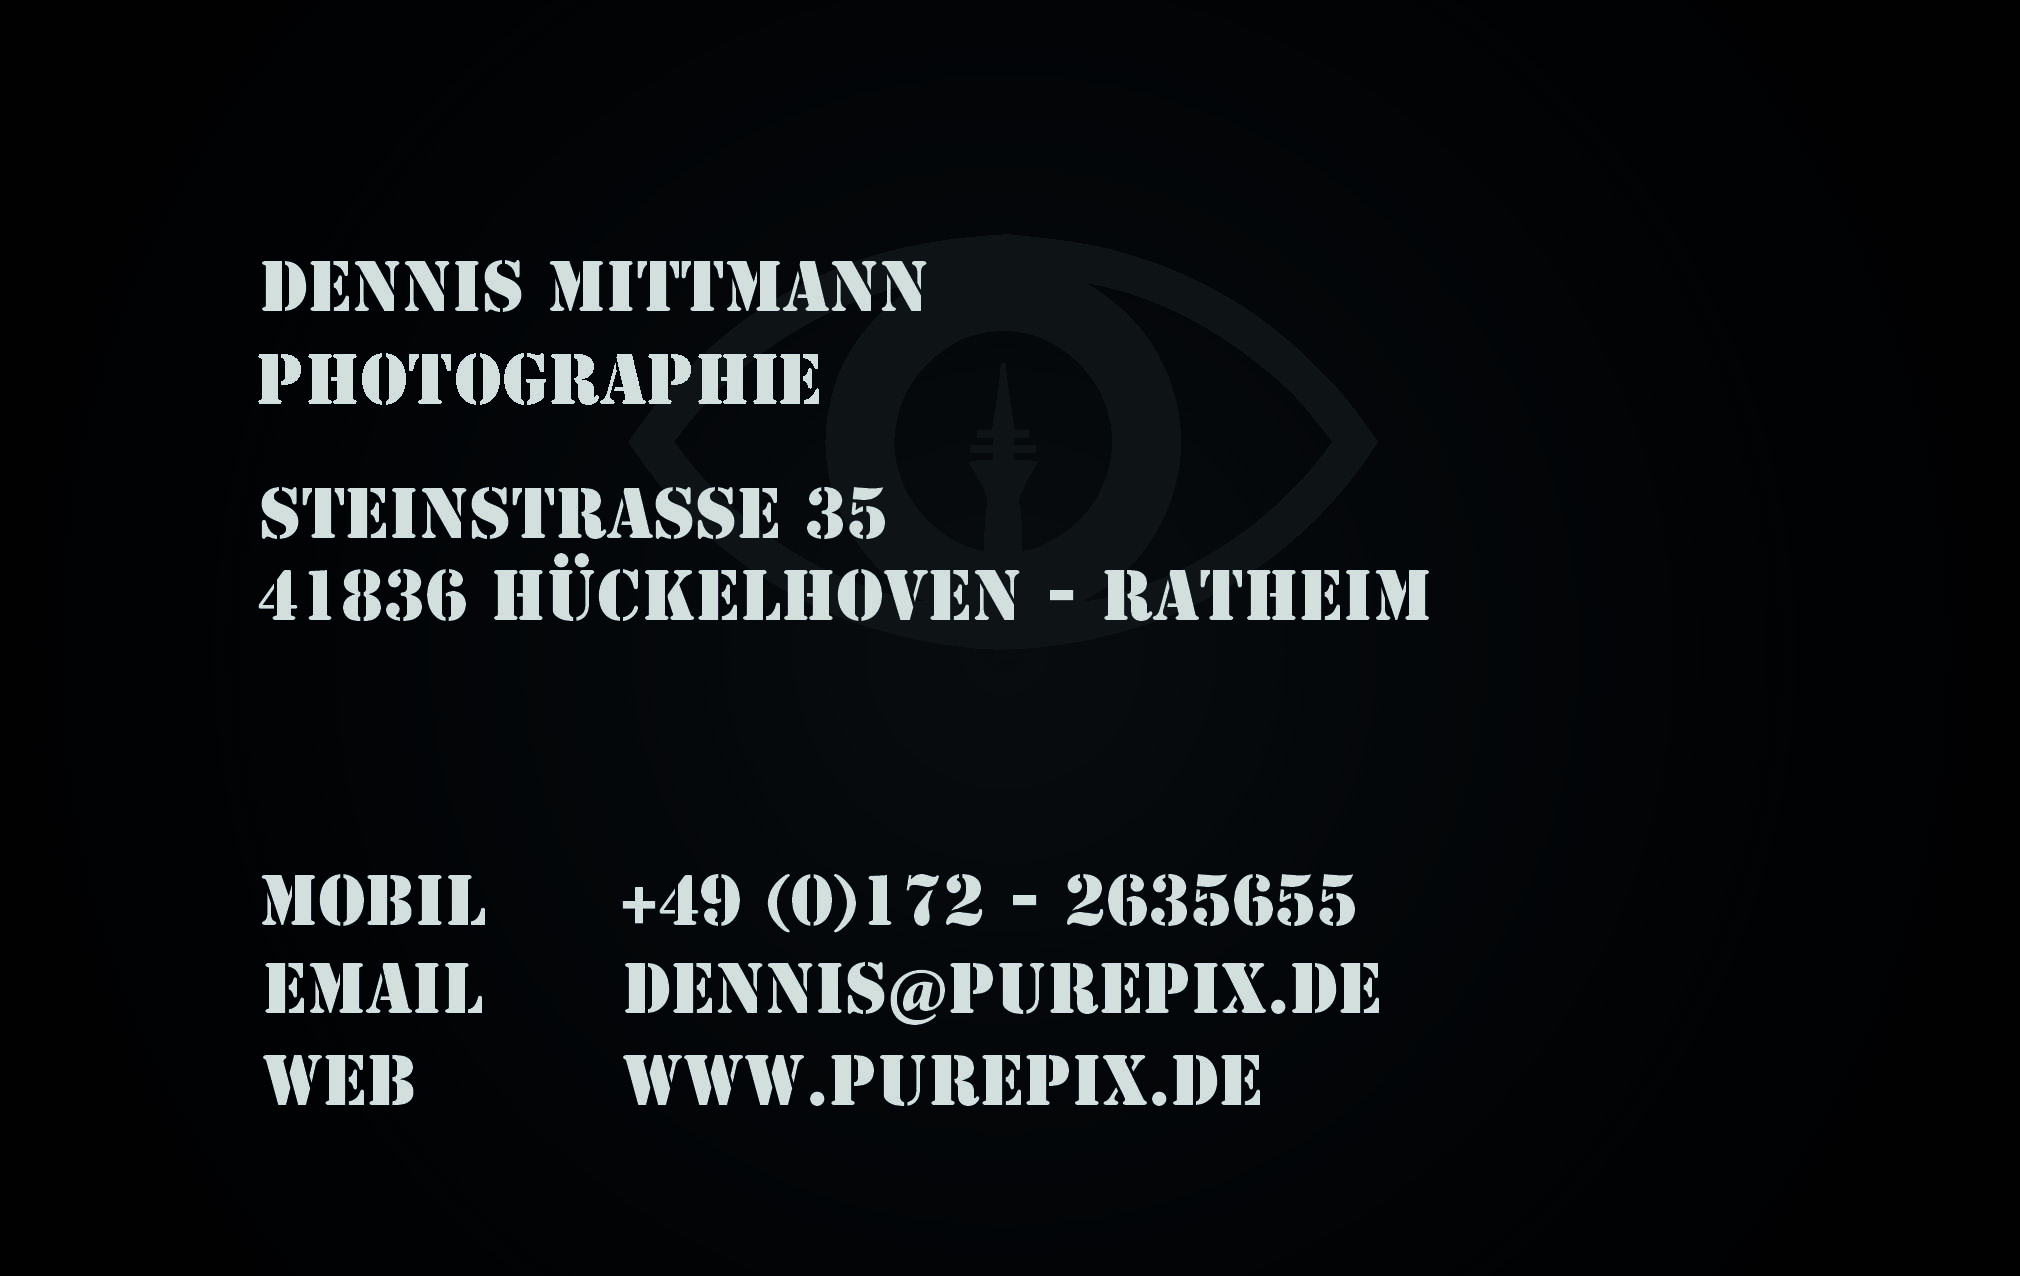 Dennis Mittmann Photography